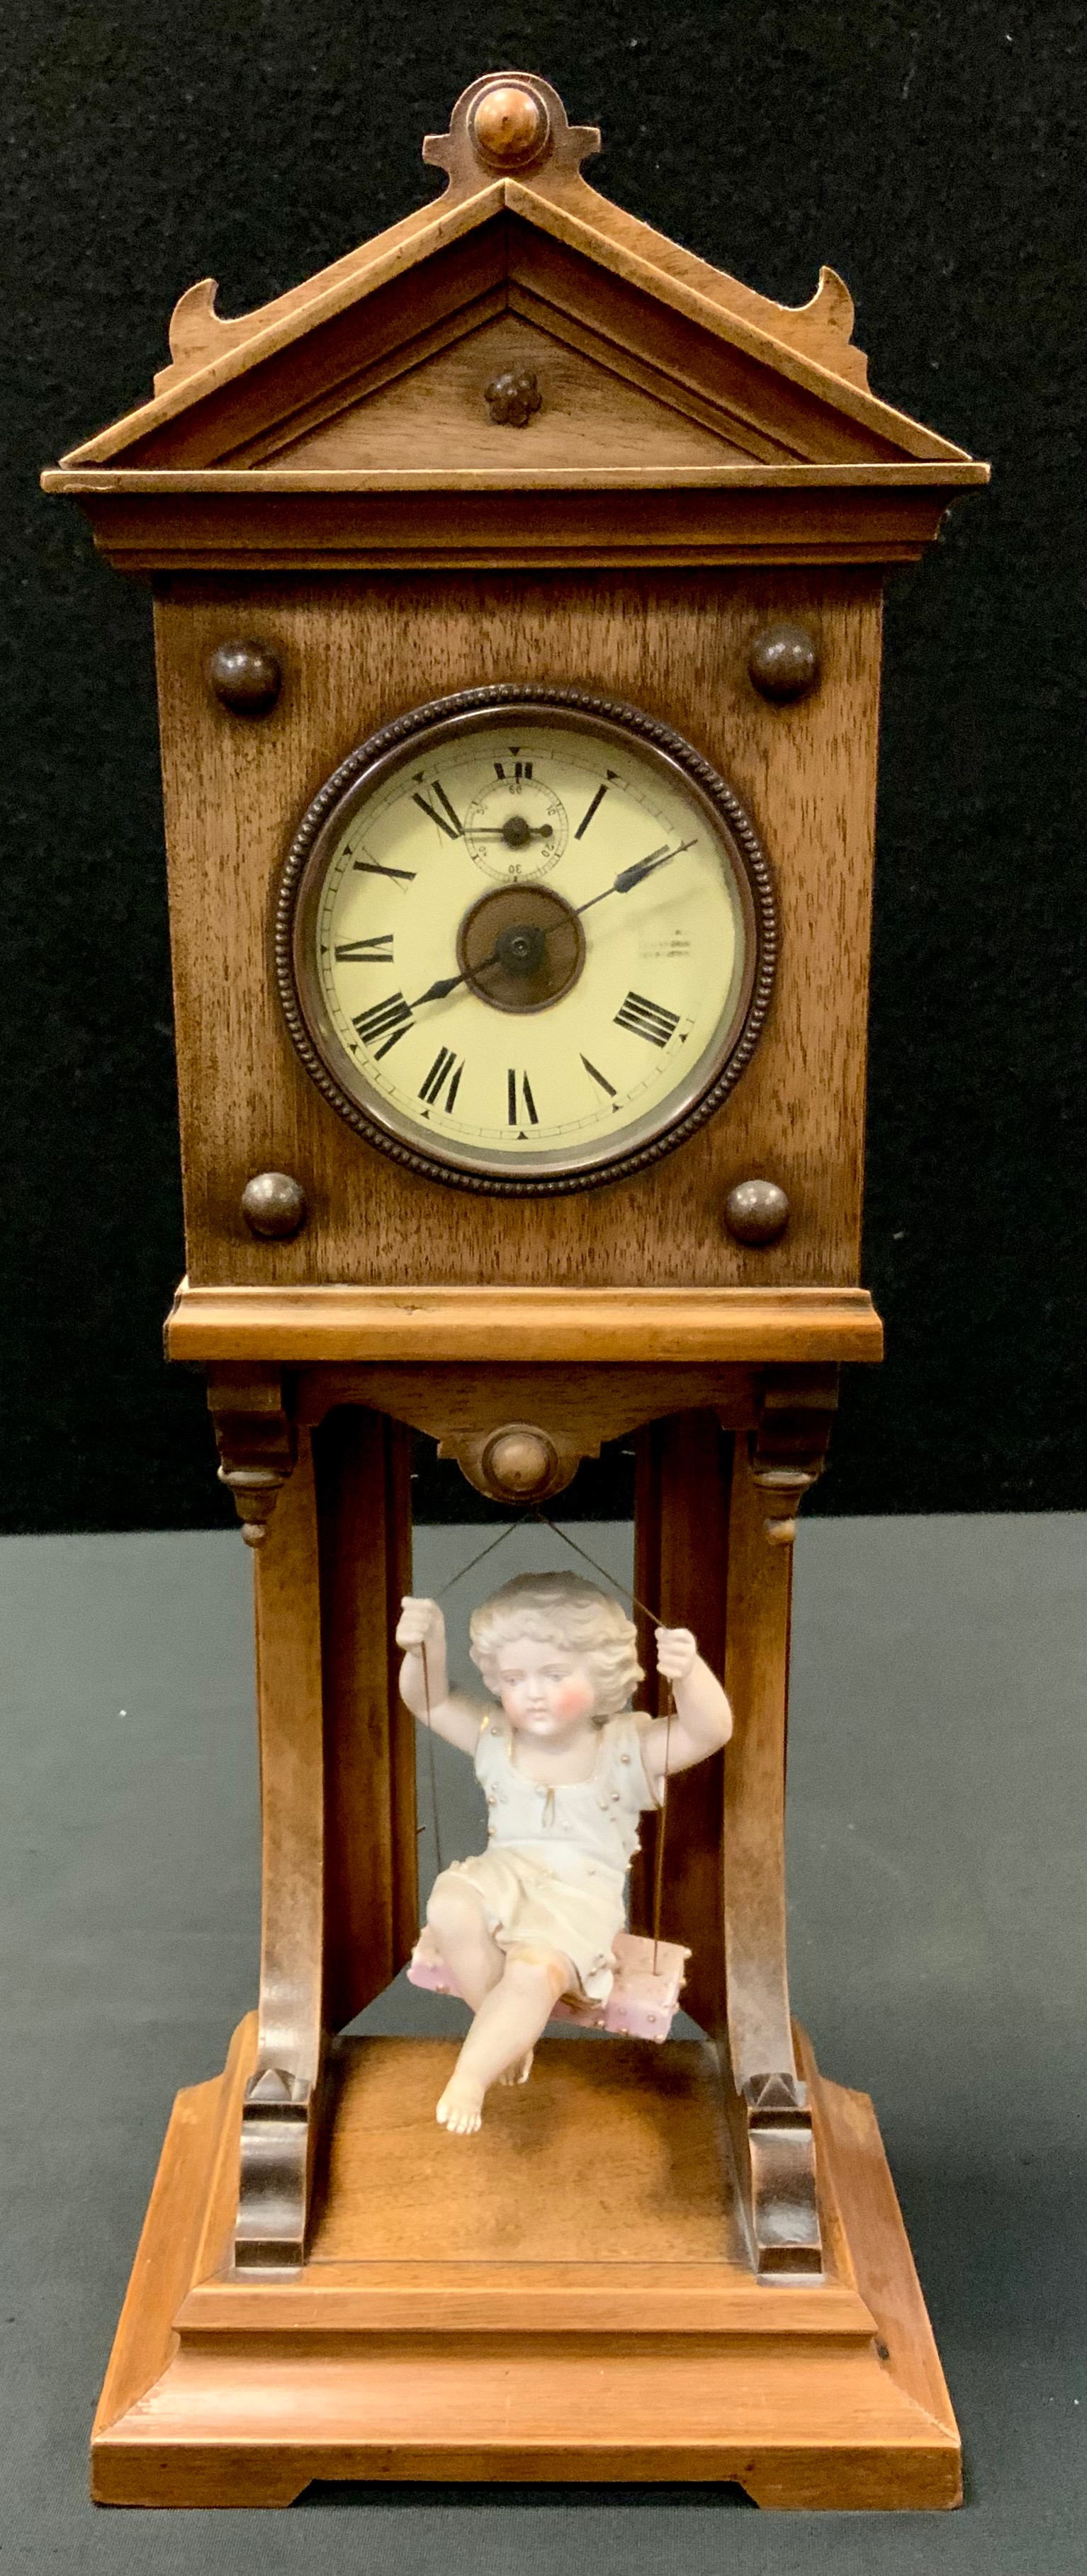 A 19th century German mantel clock, Roman numerals, the case architectural pediment, the pendulum